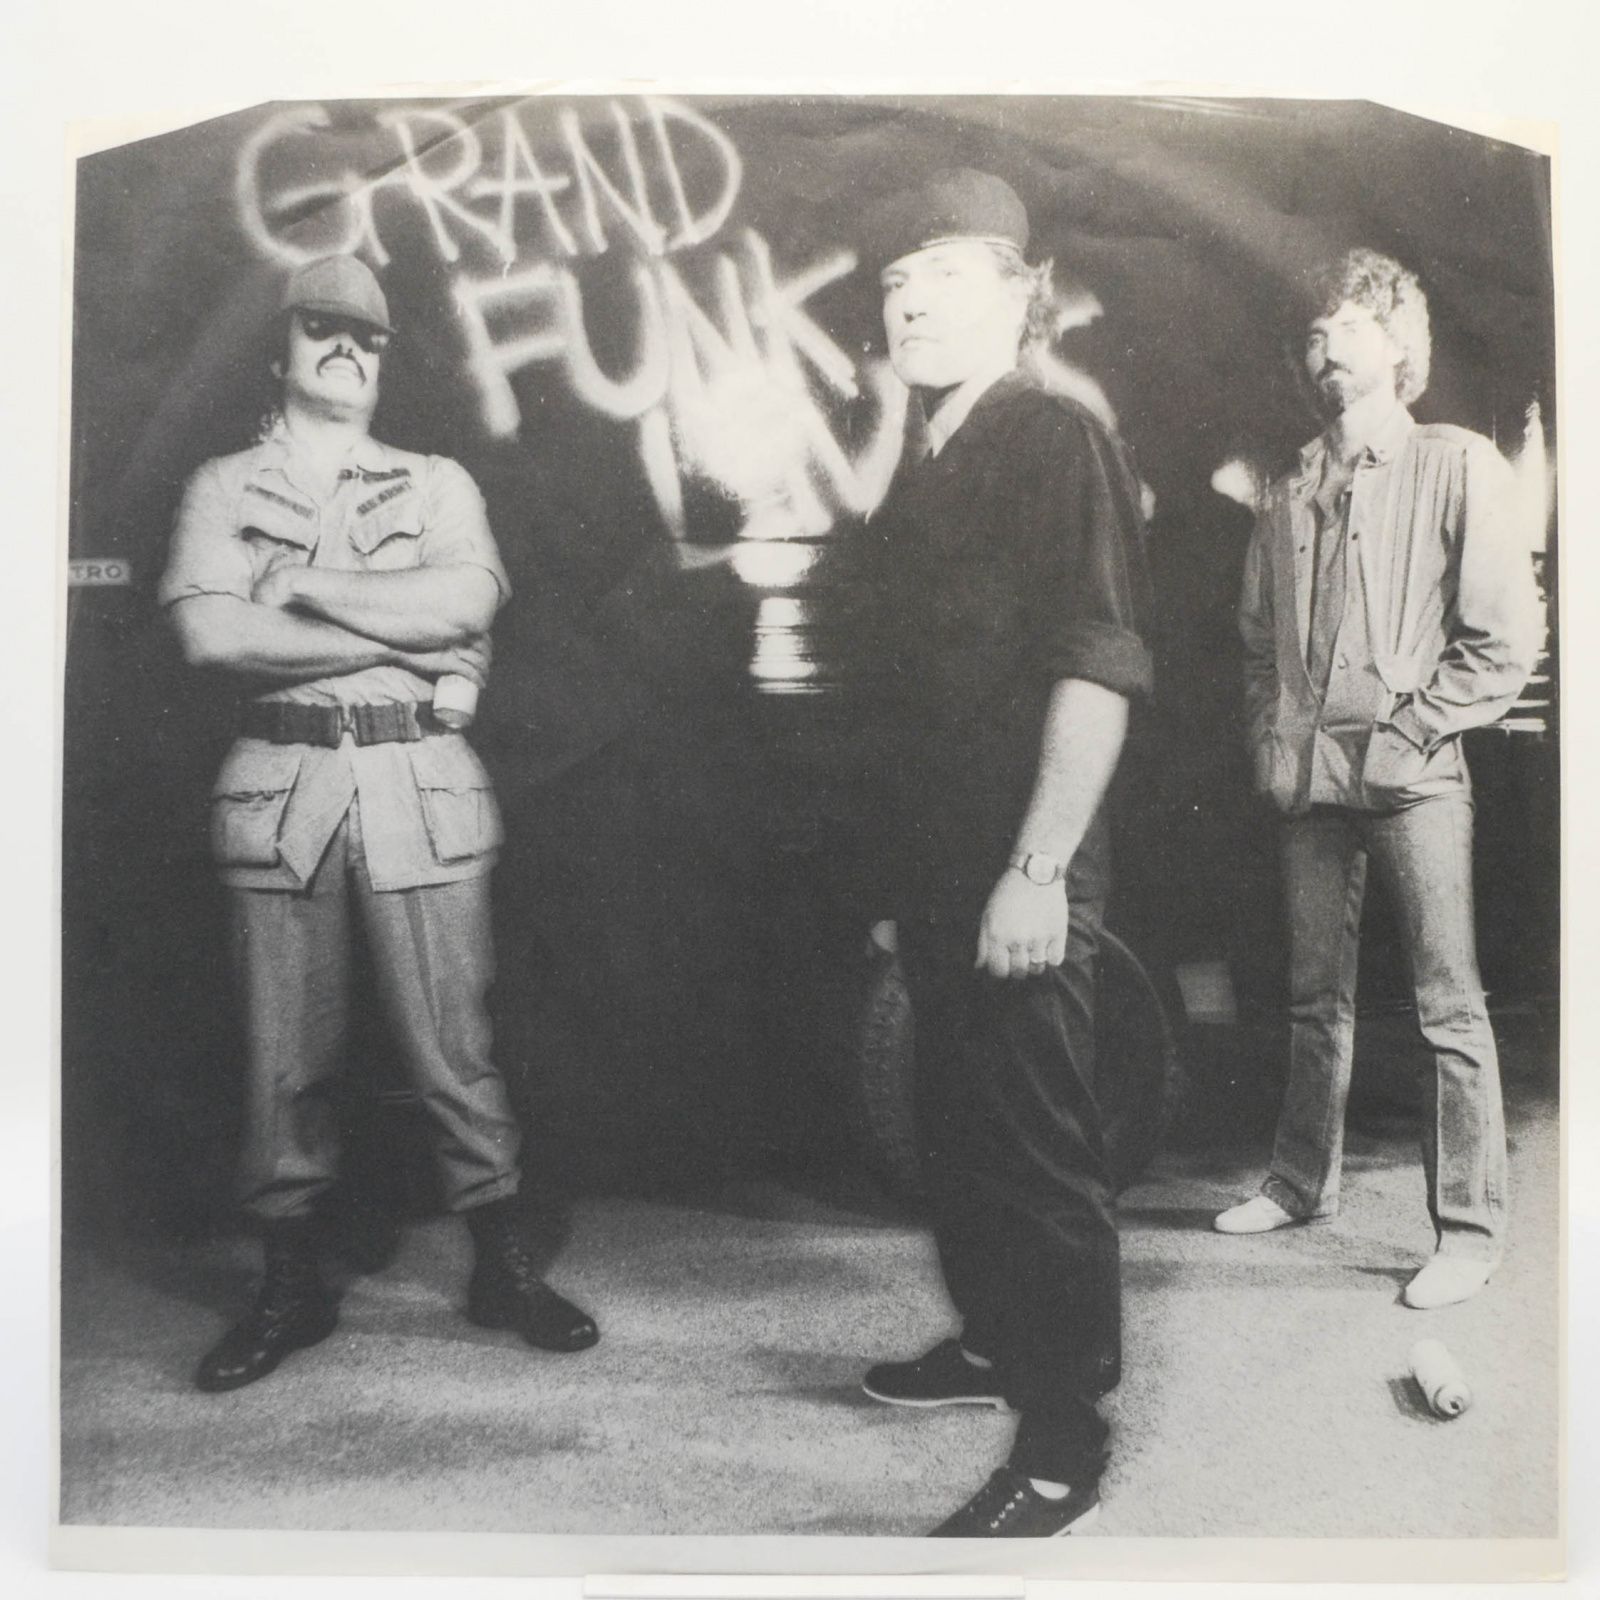 Grand Funk Railroad — Grand Funk Lives, 1981